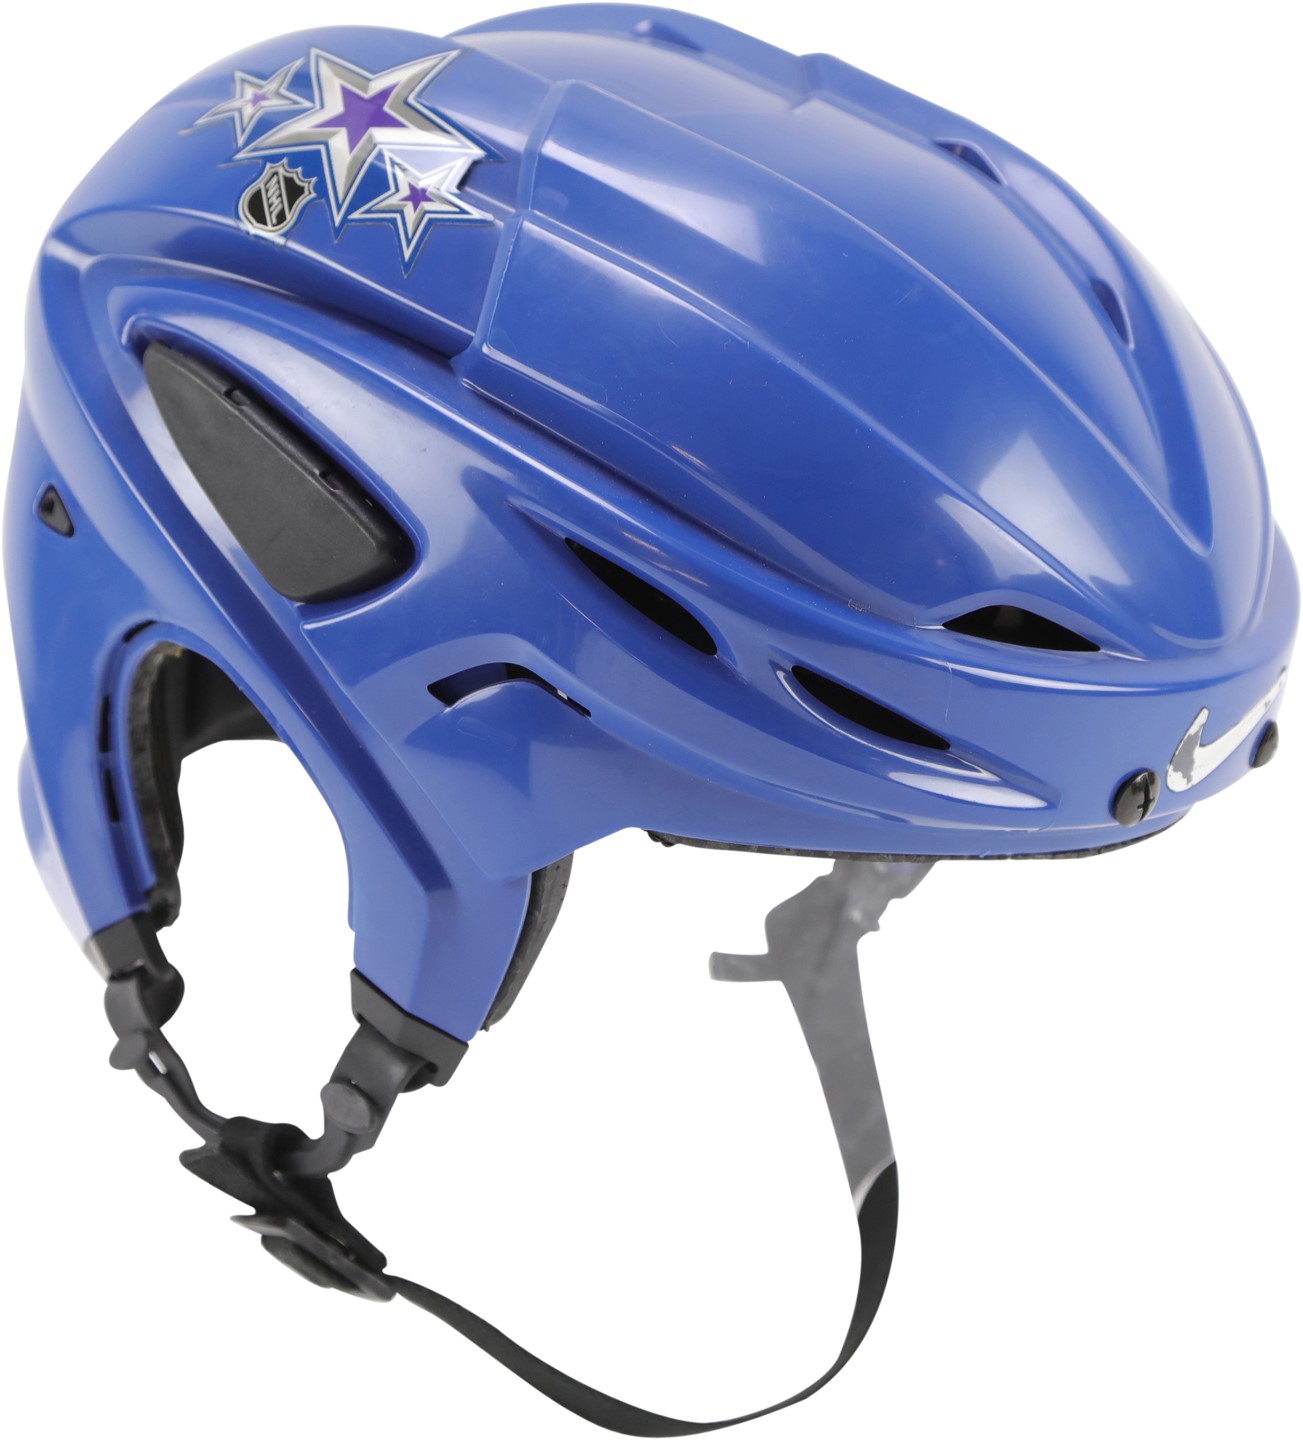 - 2002 Mario Lemieux All-Star Game Game Worn Helmet (Photo-Matched)